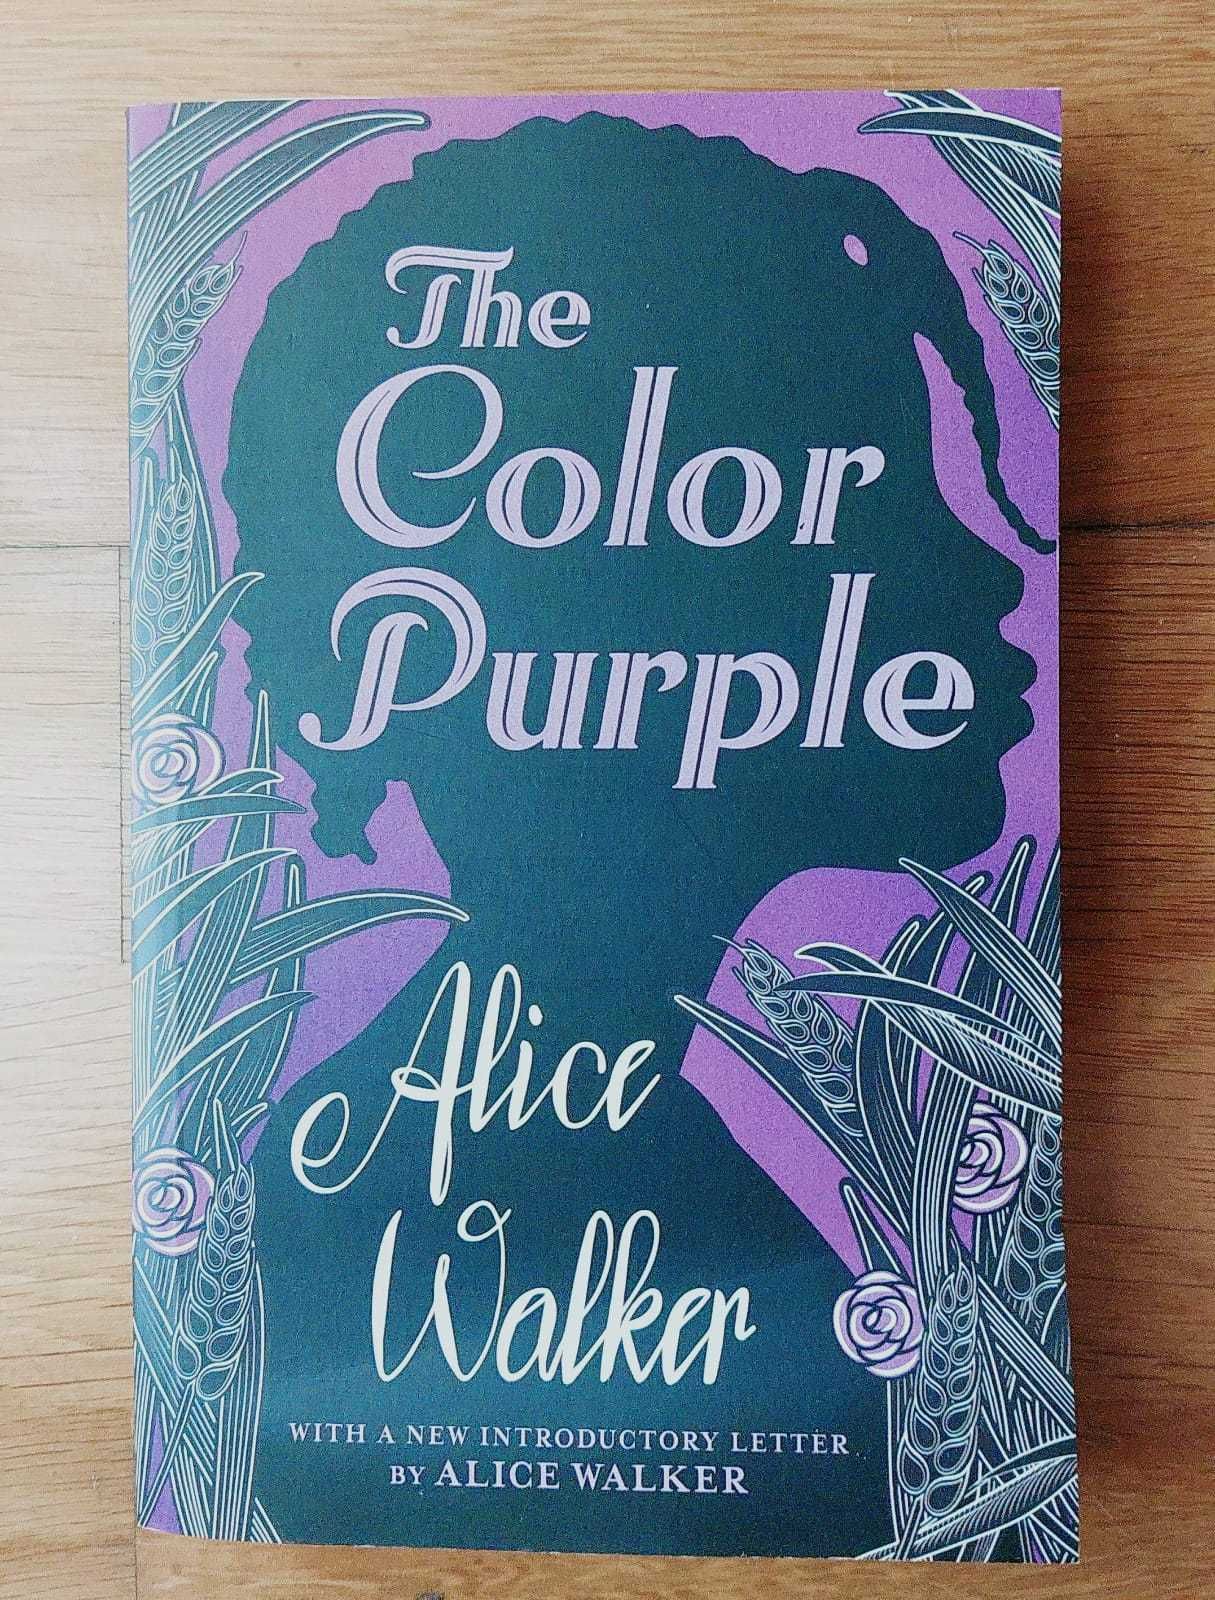 Livro "The color purple"